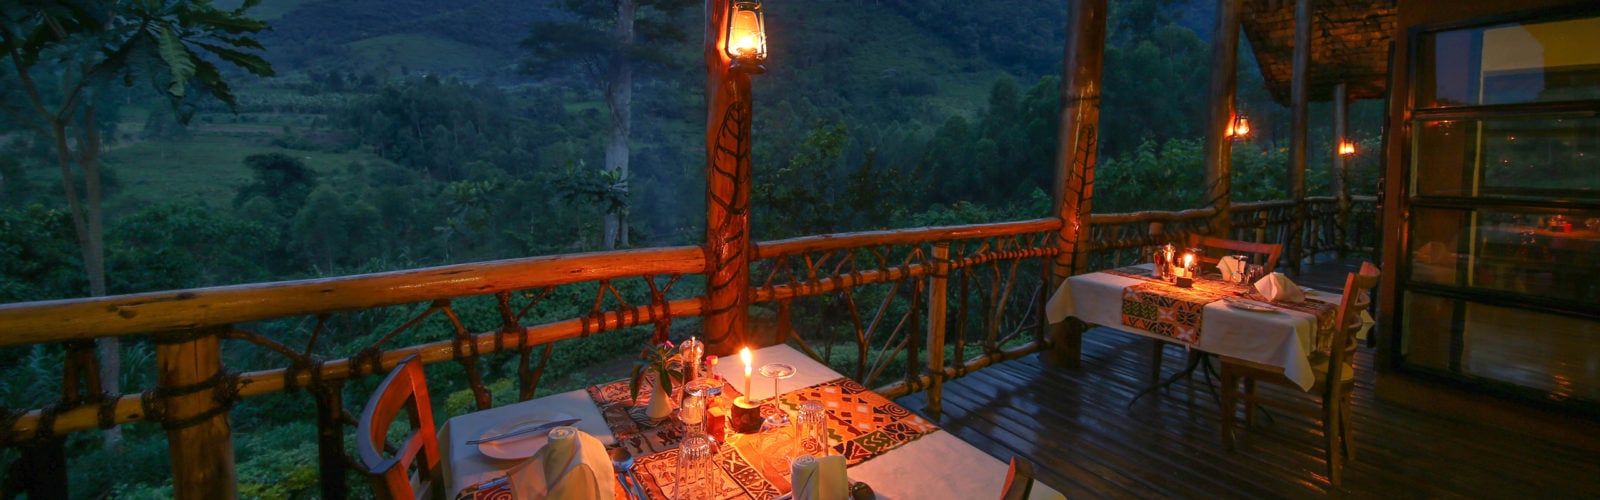 mahogany-springs-outdoor-dining